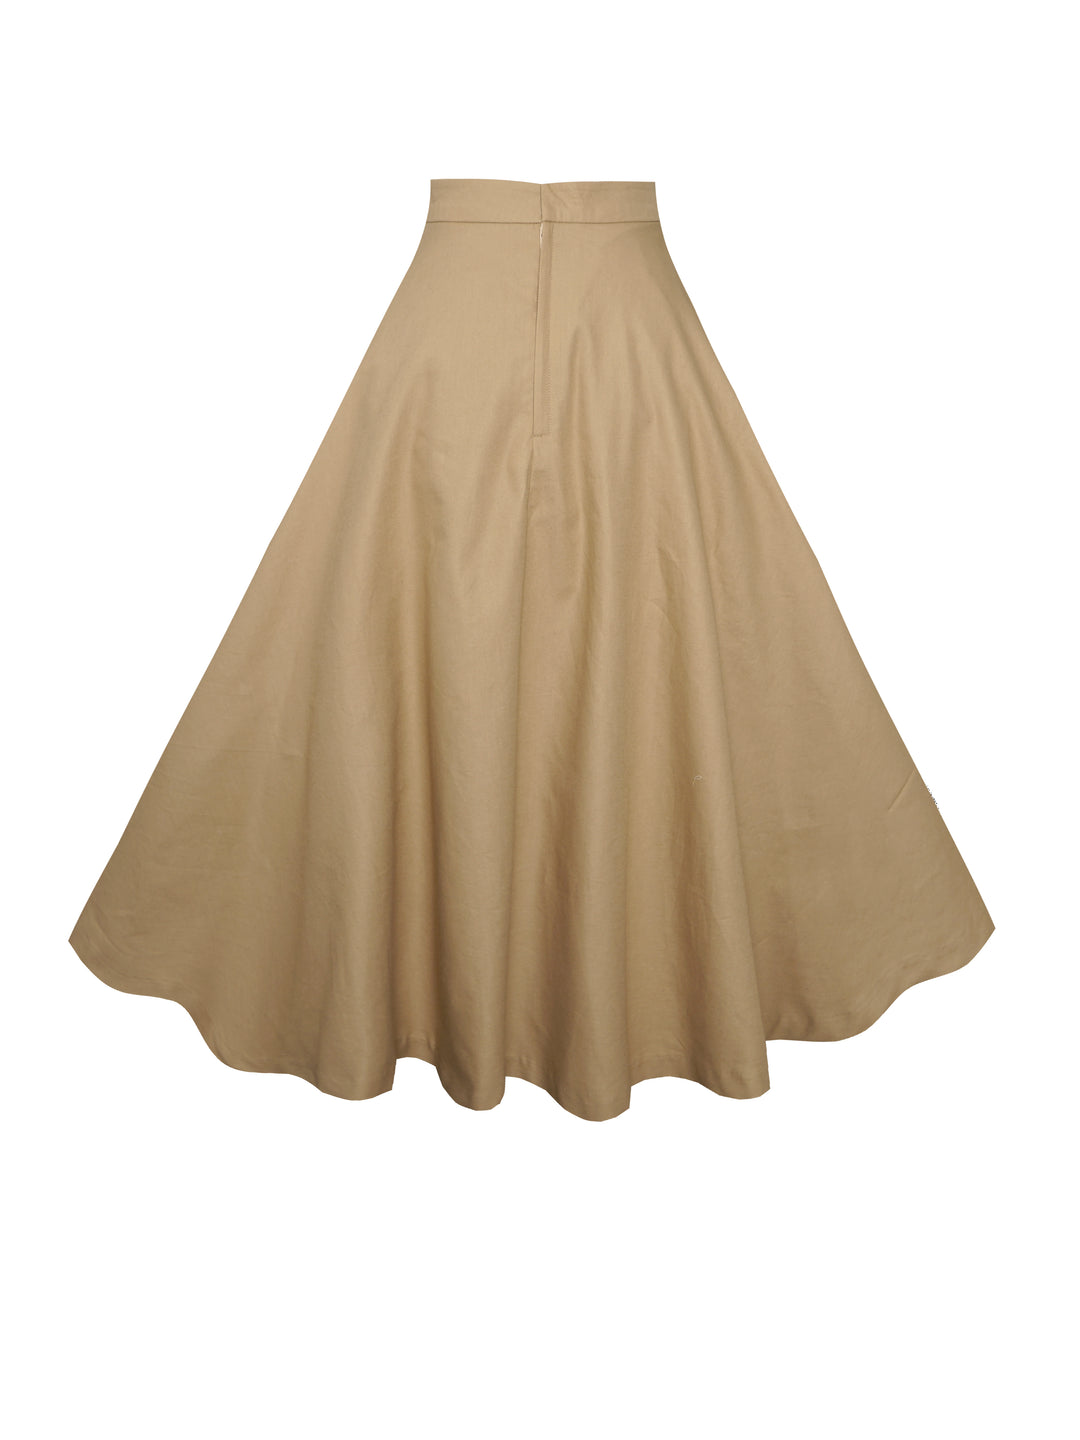 MTO - Lilian Skirt in Camel Beige Cotton